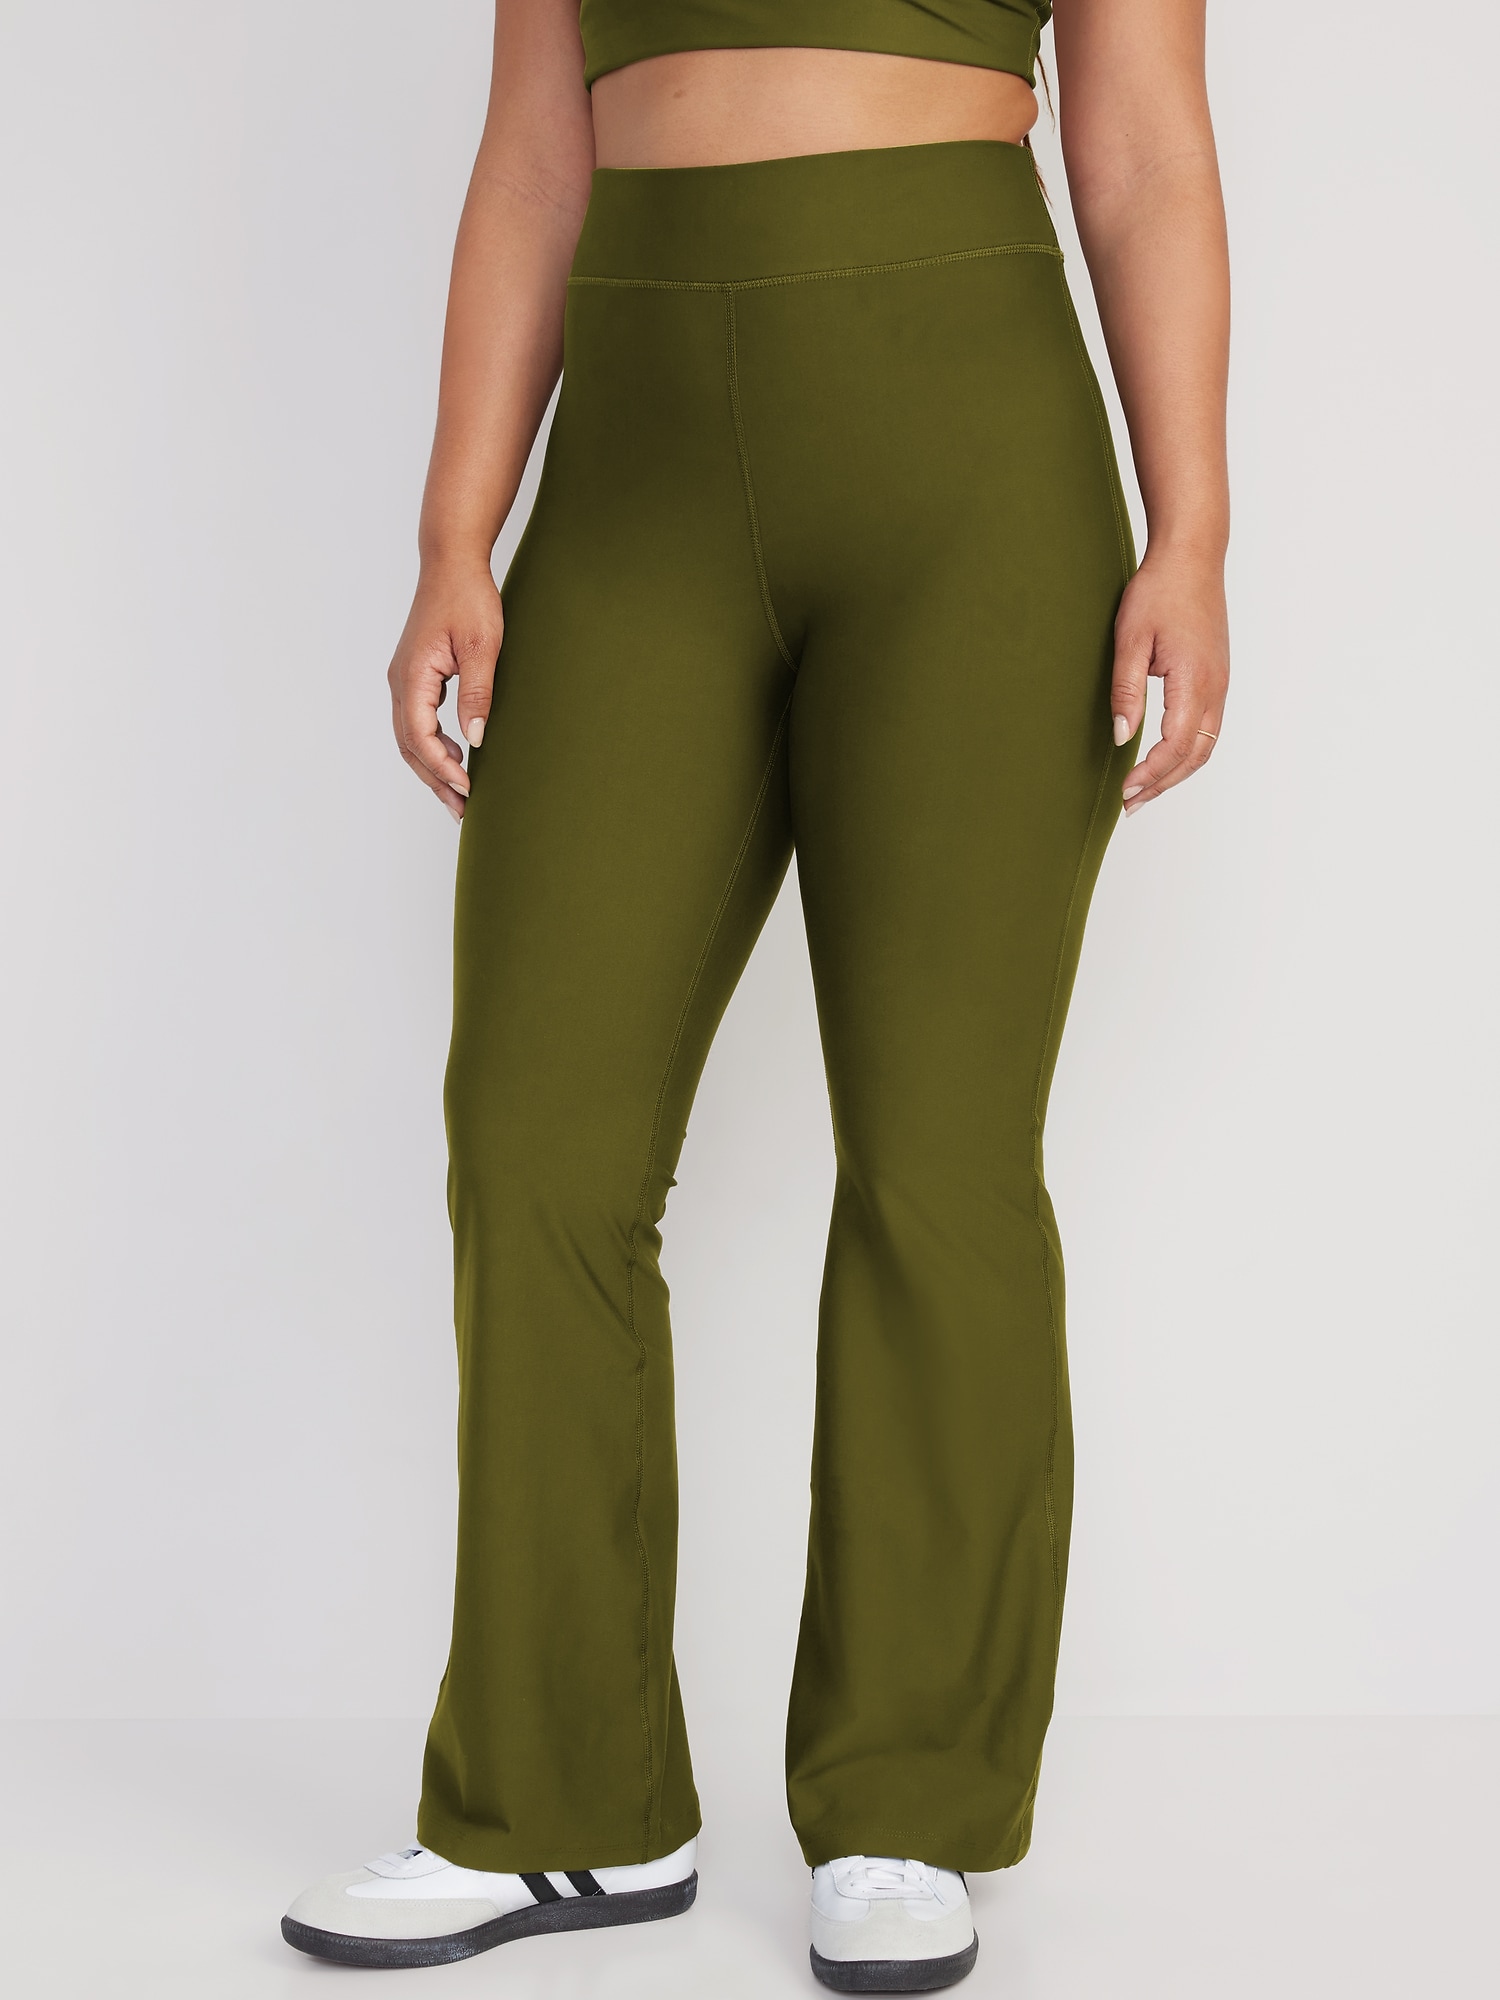 Litthing Bootcut Yoga Pants for Women High Waist Tummy Control Hidden  Pocket (Black, XXL) : : Clothing & Accessories